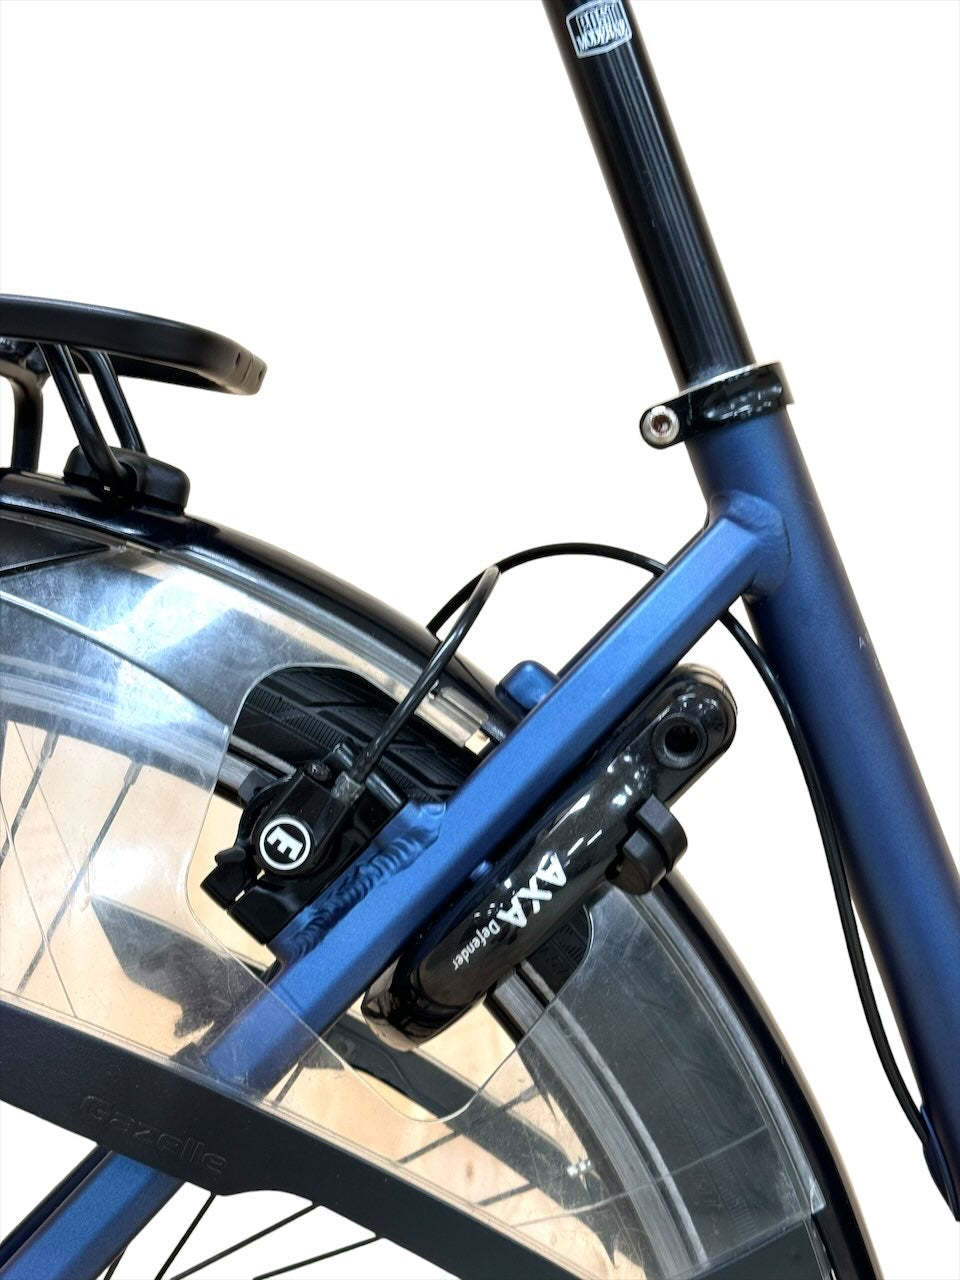 <tc>Gazelle Arroyo C7+ HBM Elite 28 polegadas Bicicleta elétrica</tc>